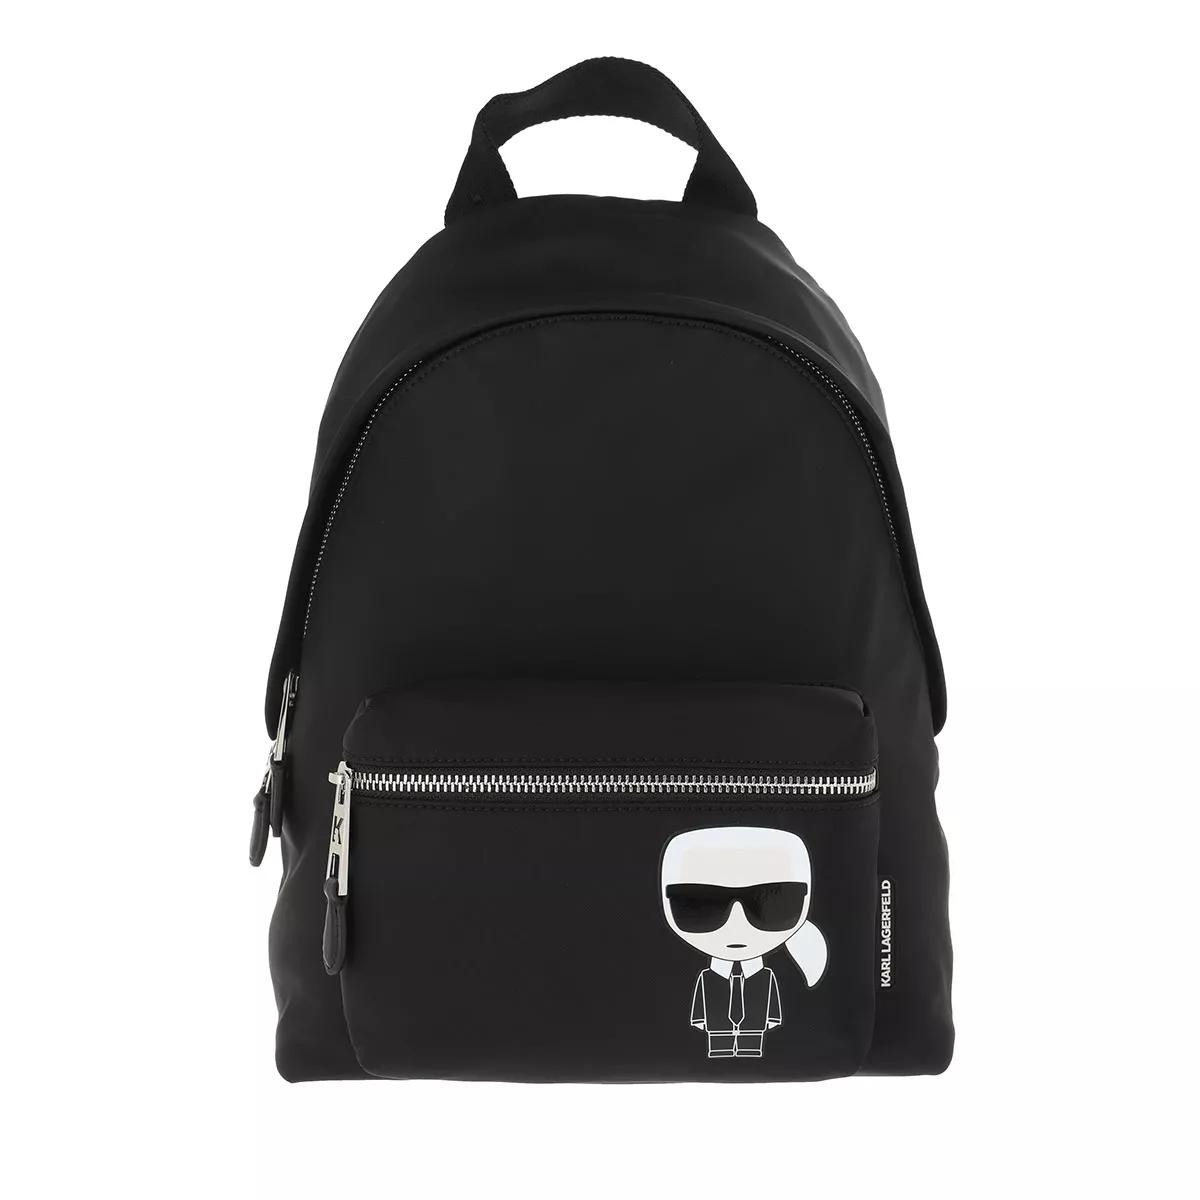 Werkwijze vandaag Verenigde Staten van Amerika Karl Lagerfeld Ikonik Nylon Klassik Medium Backpack A999 Black | Rugzak |  fashionette